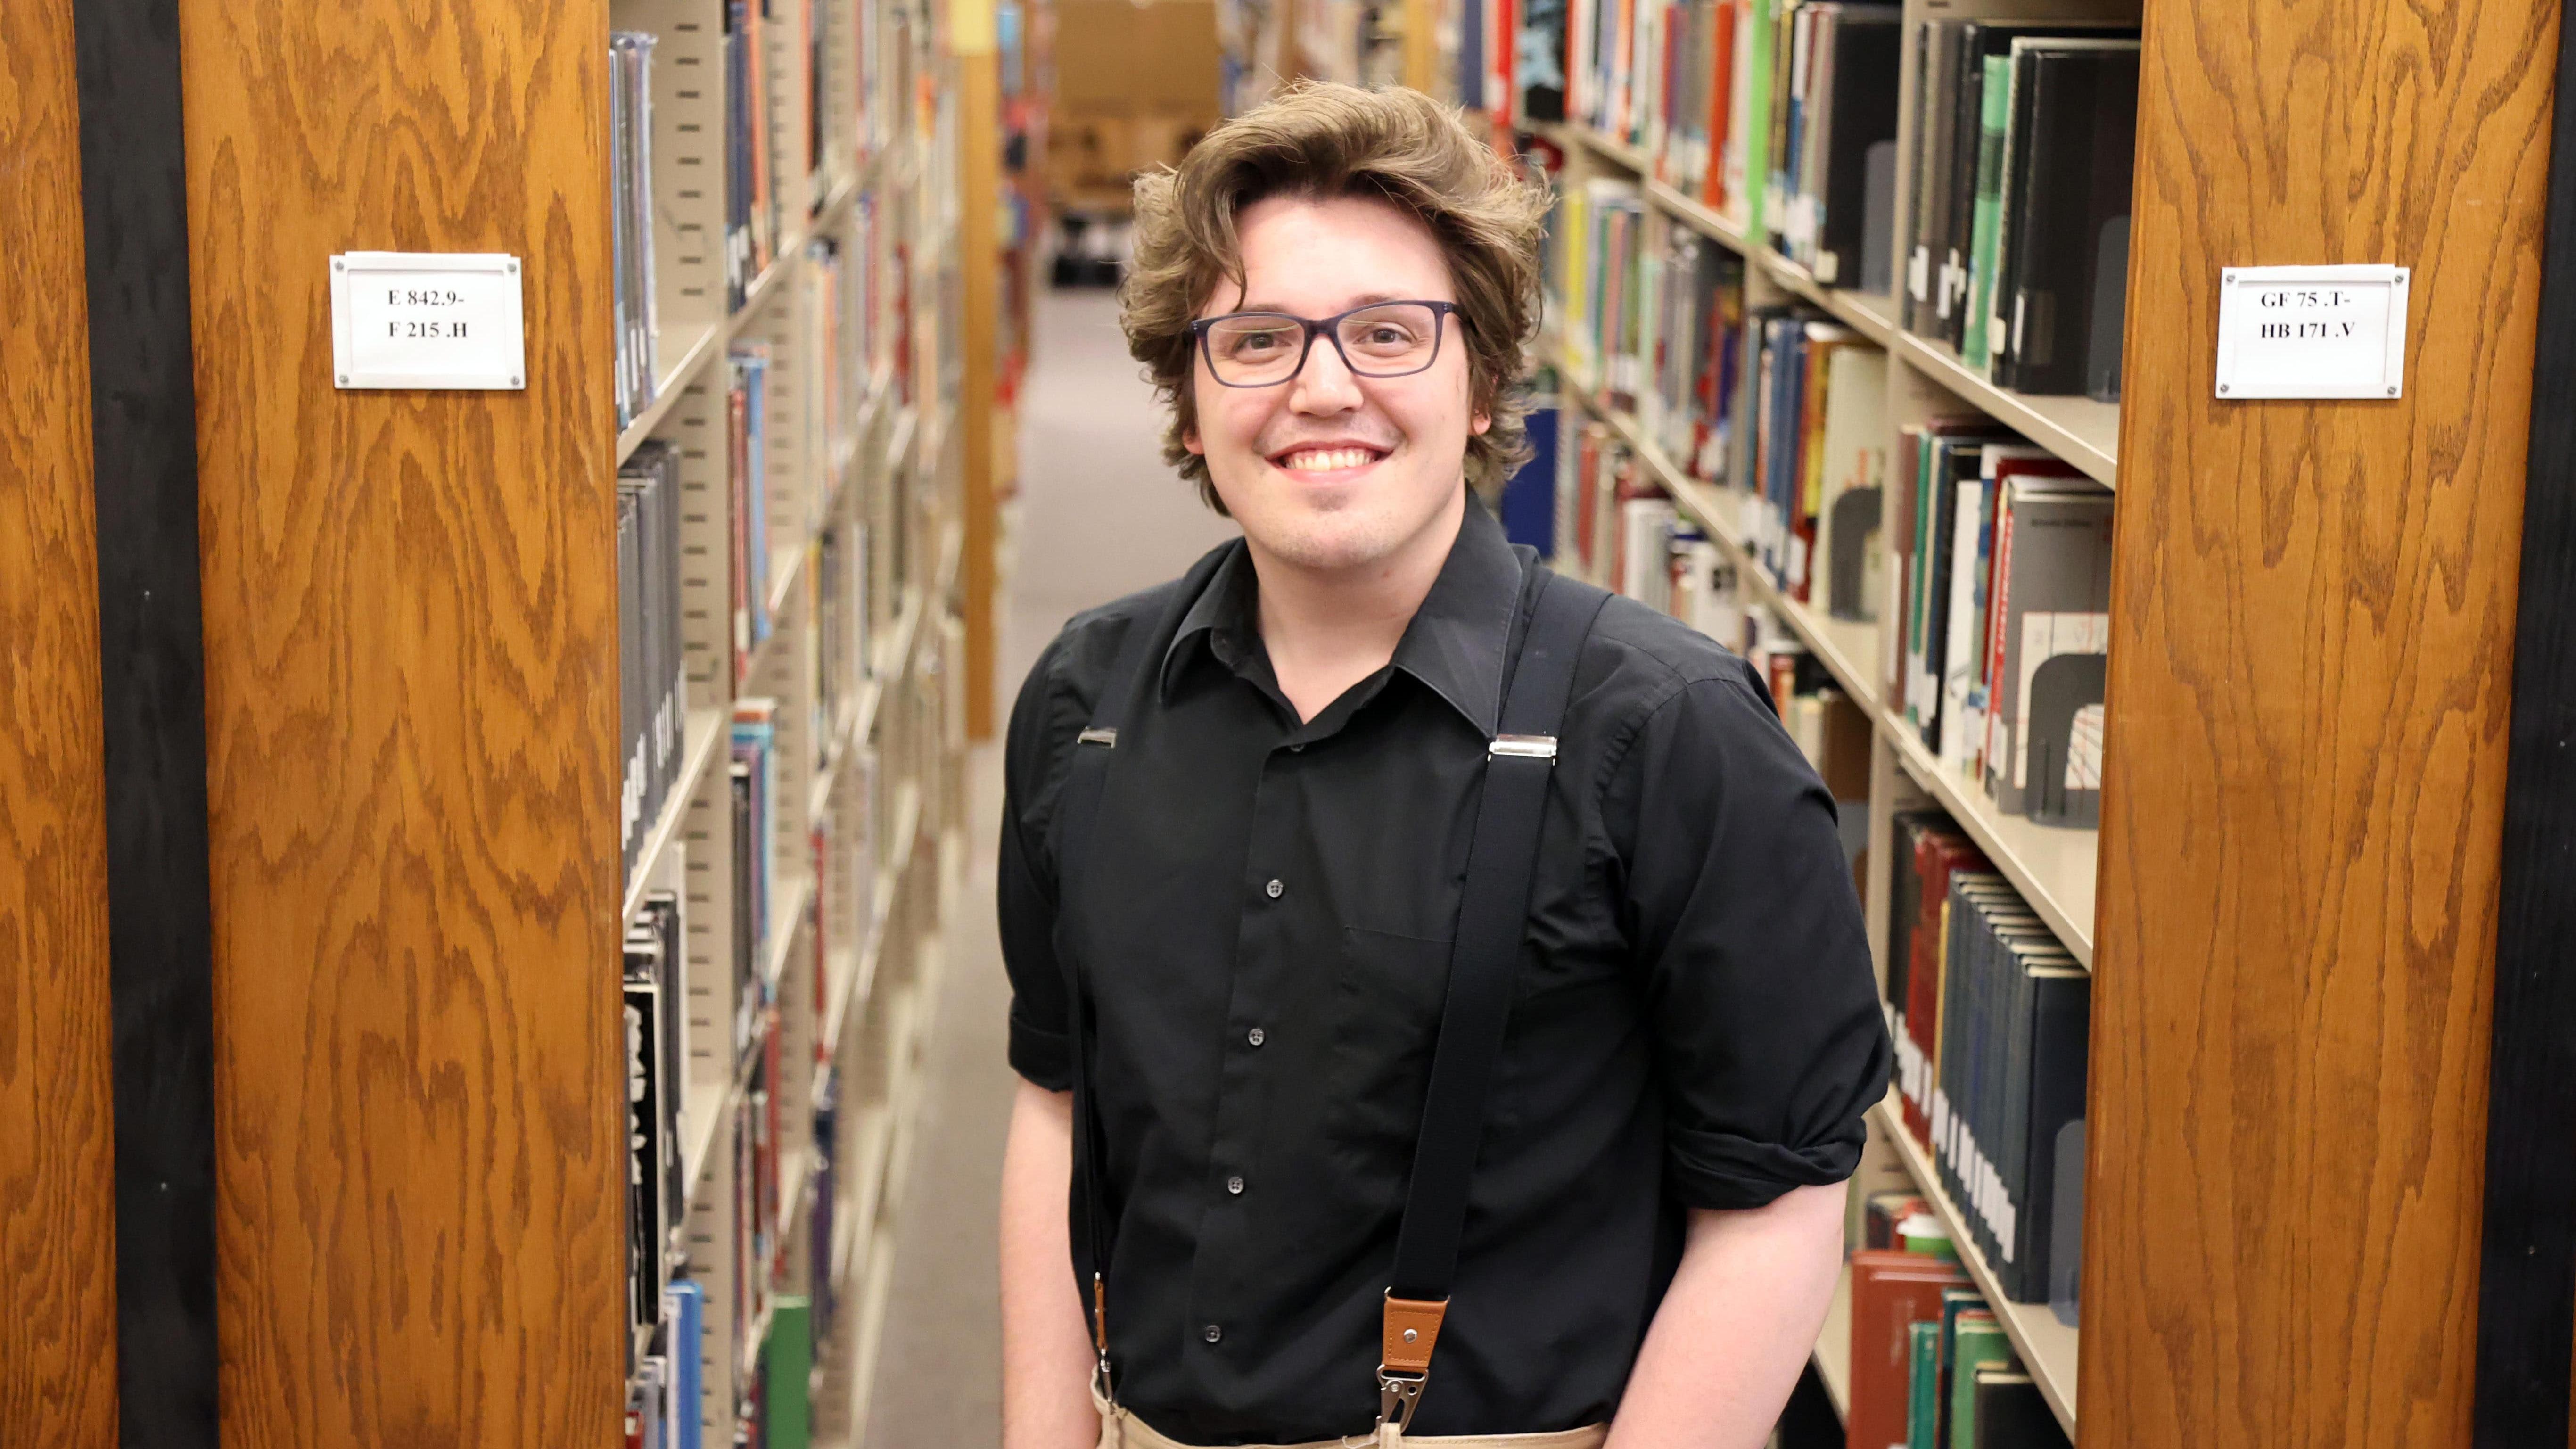 Zach Walton in the Lima Campus Library